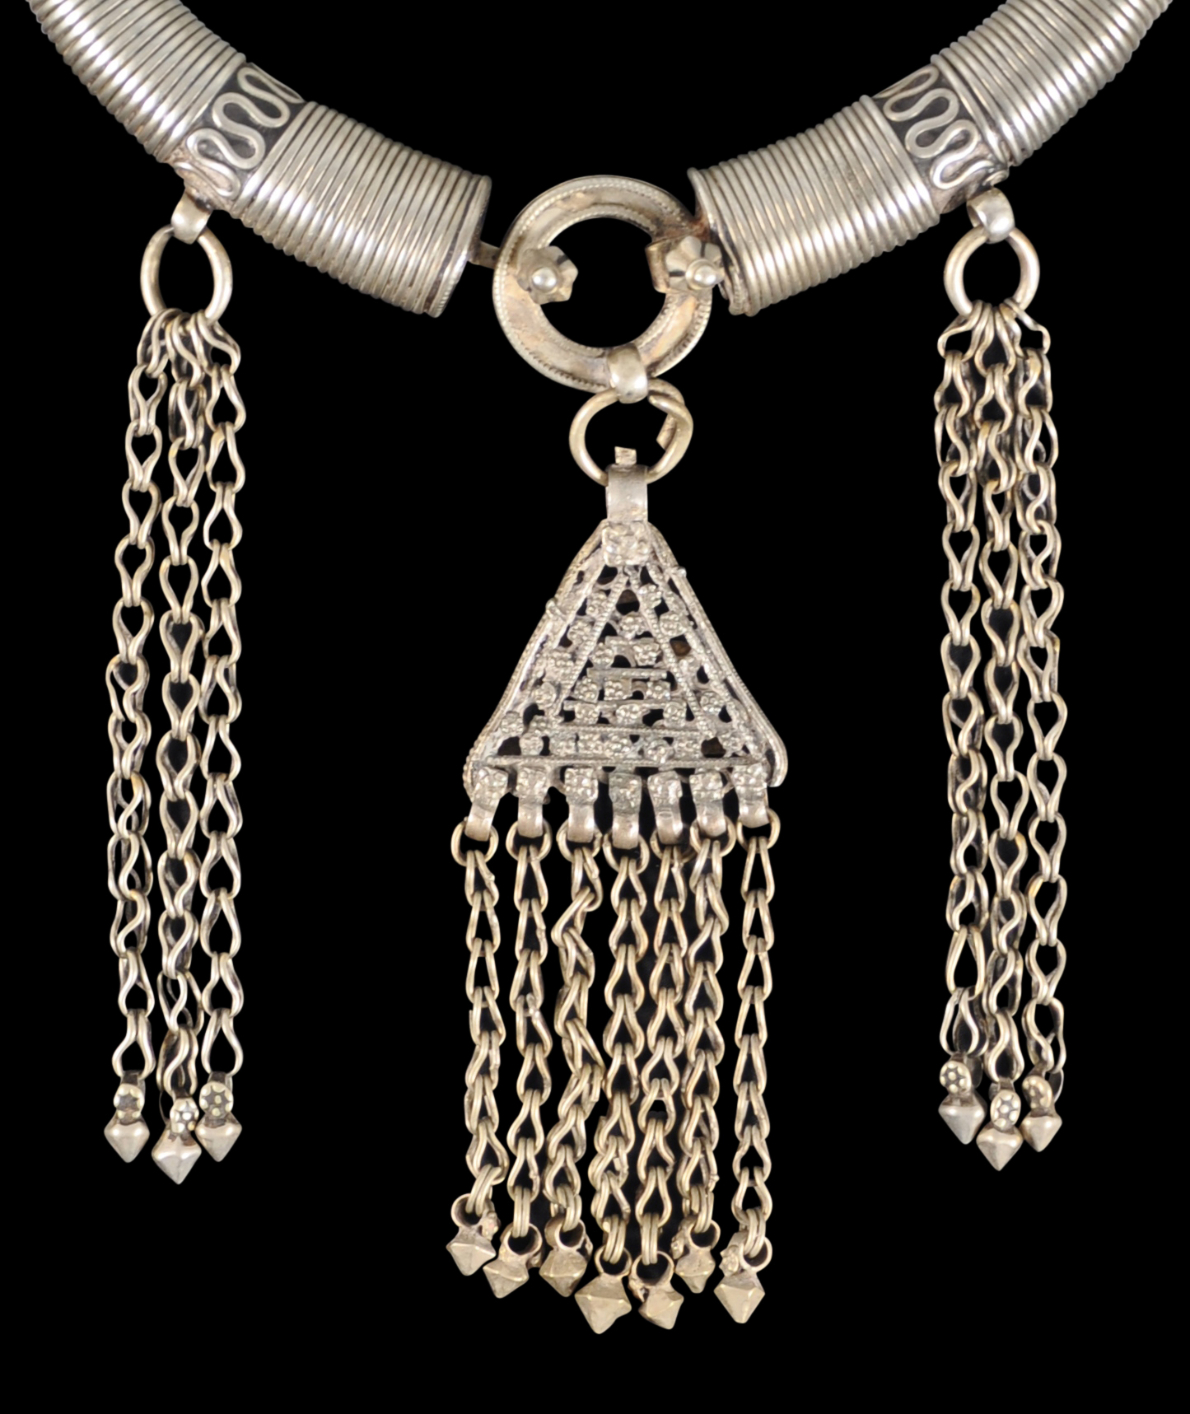 Lot of 2) Tribal Indian Banjara torque coin necklaces